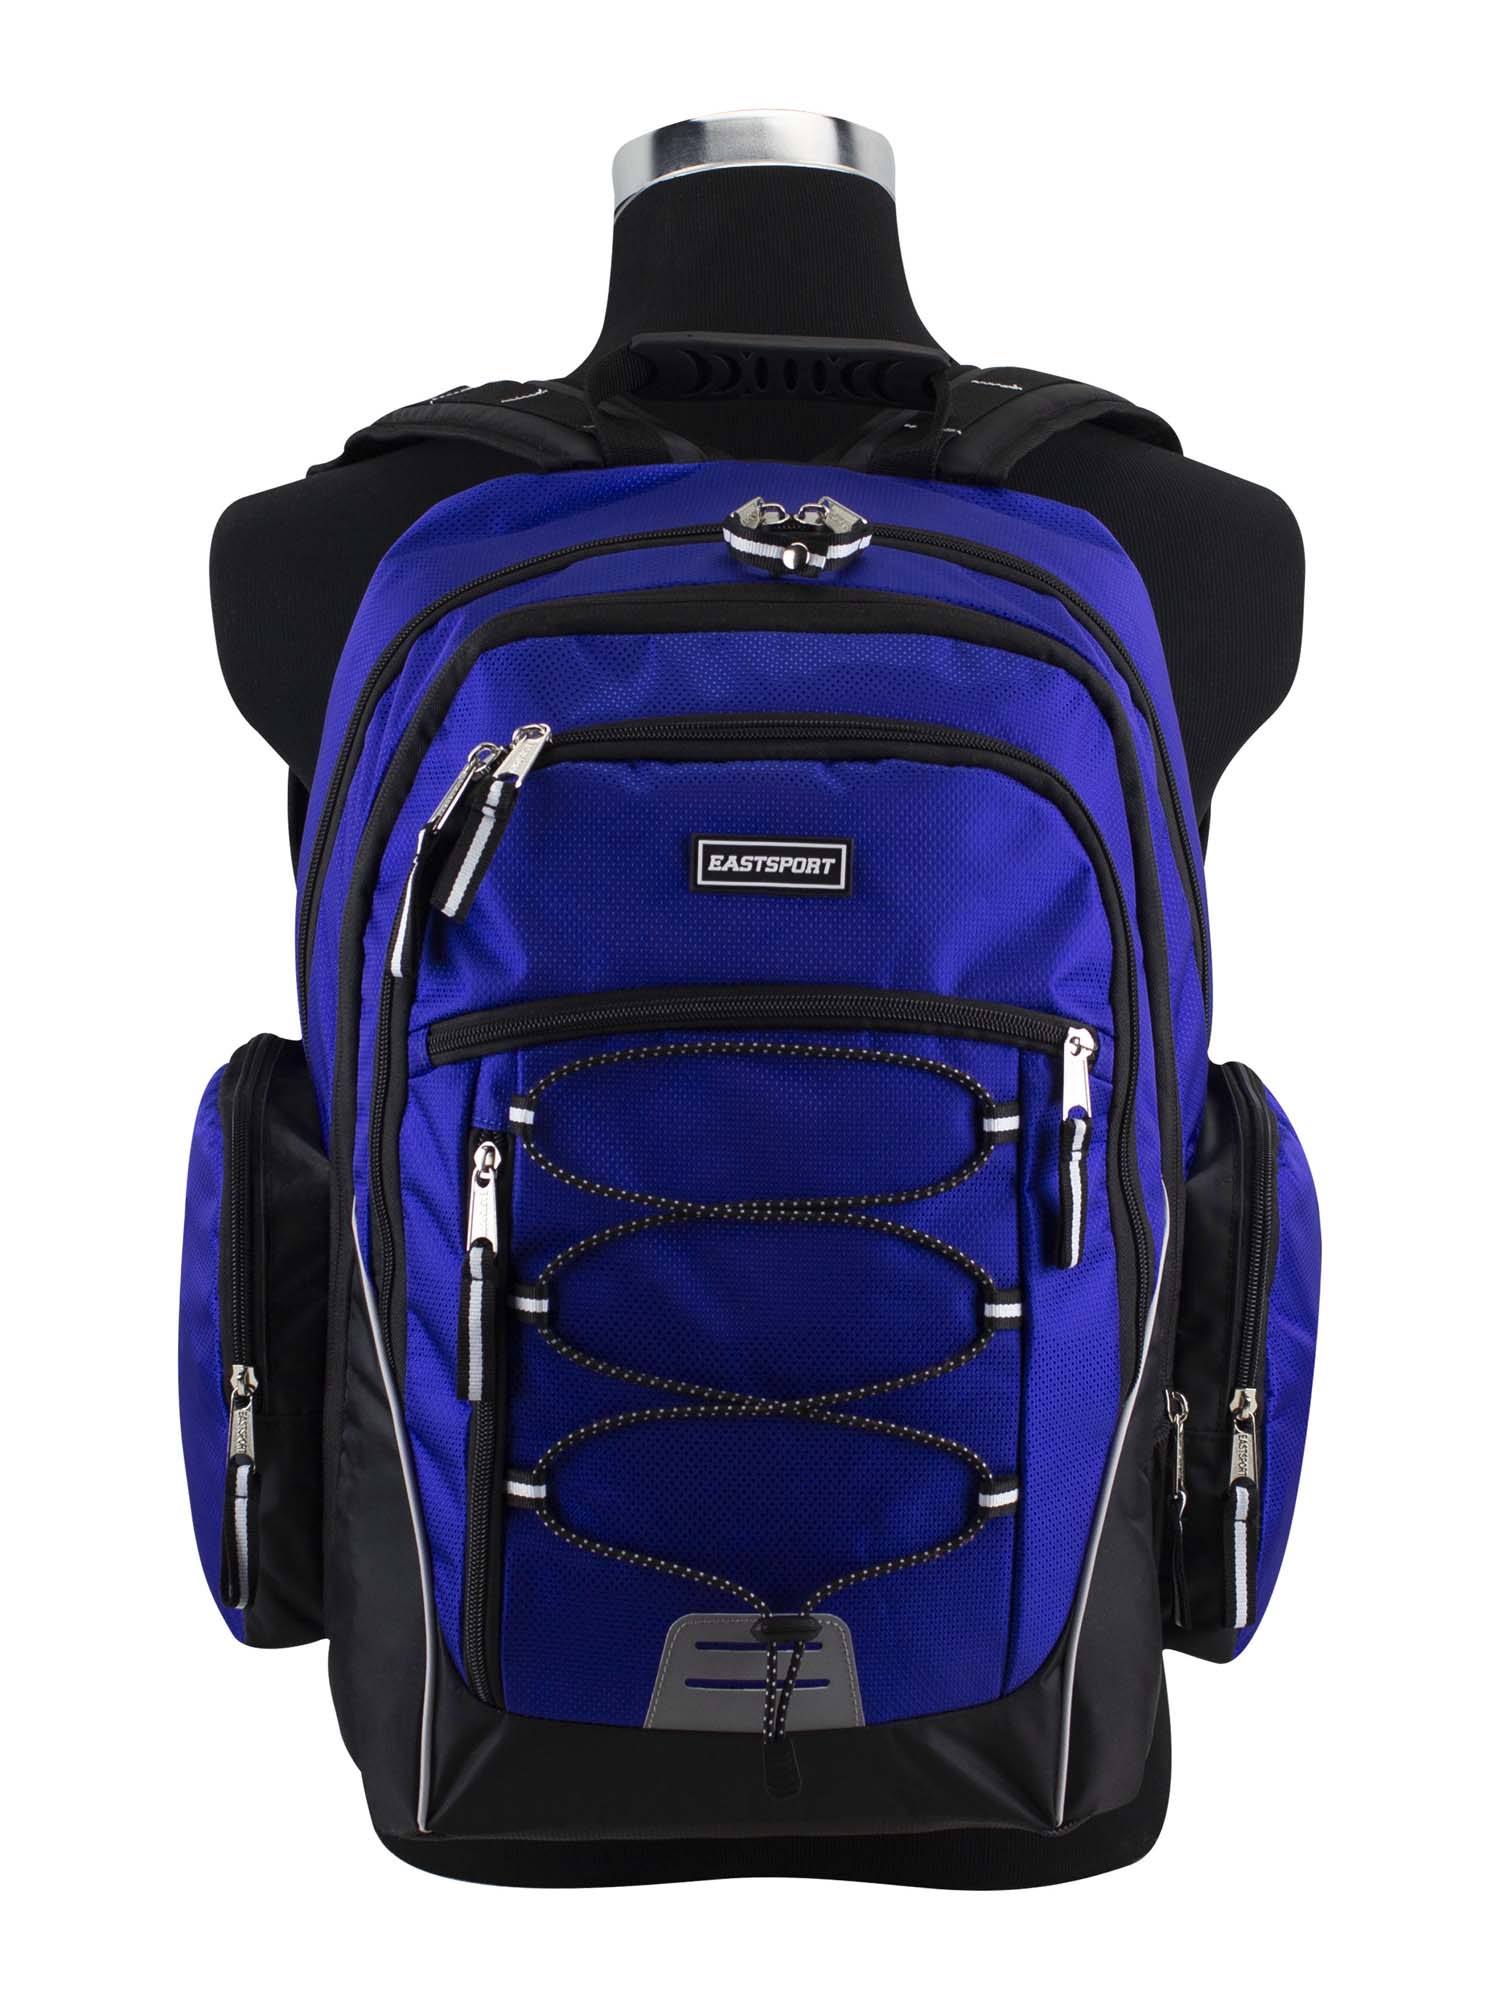 Eastsport Optimus Deep Sea Black Backpack - image 2 of 7